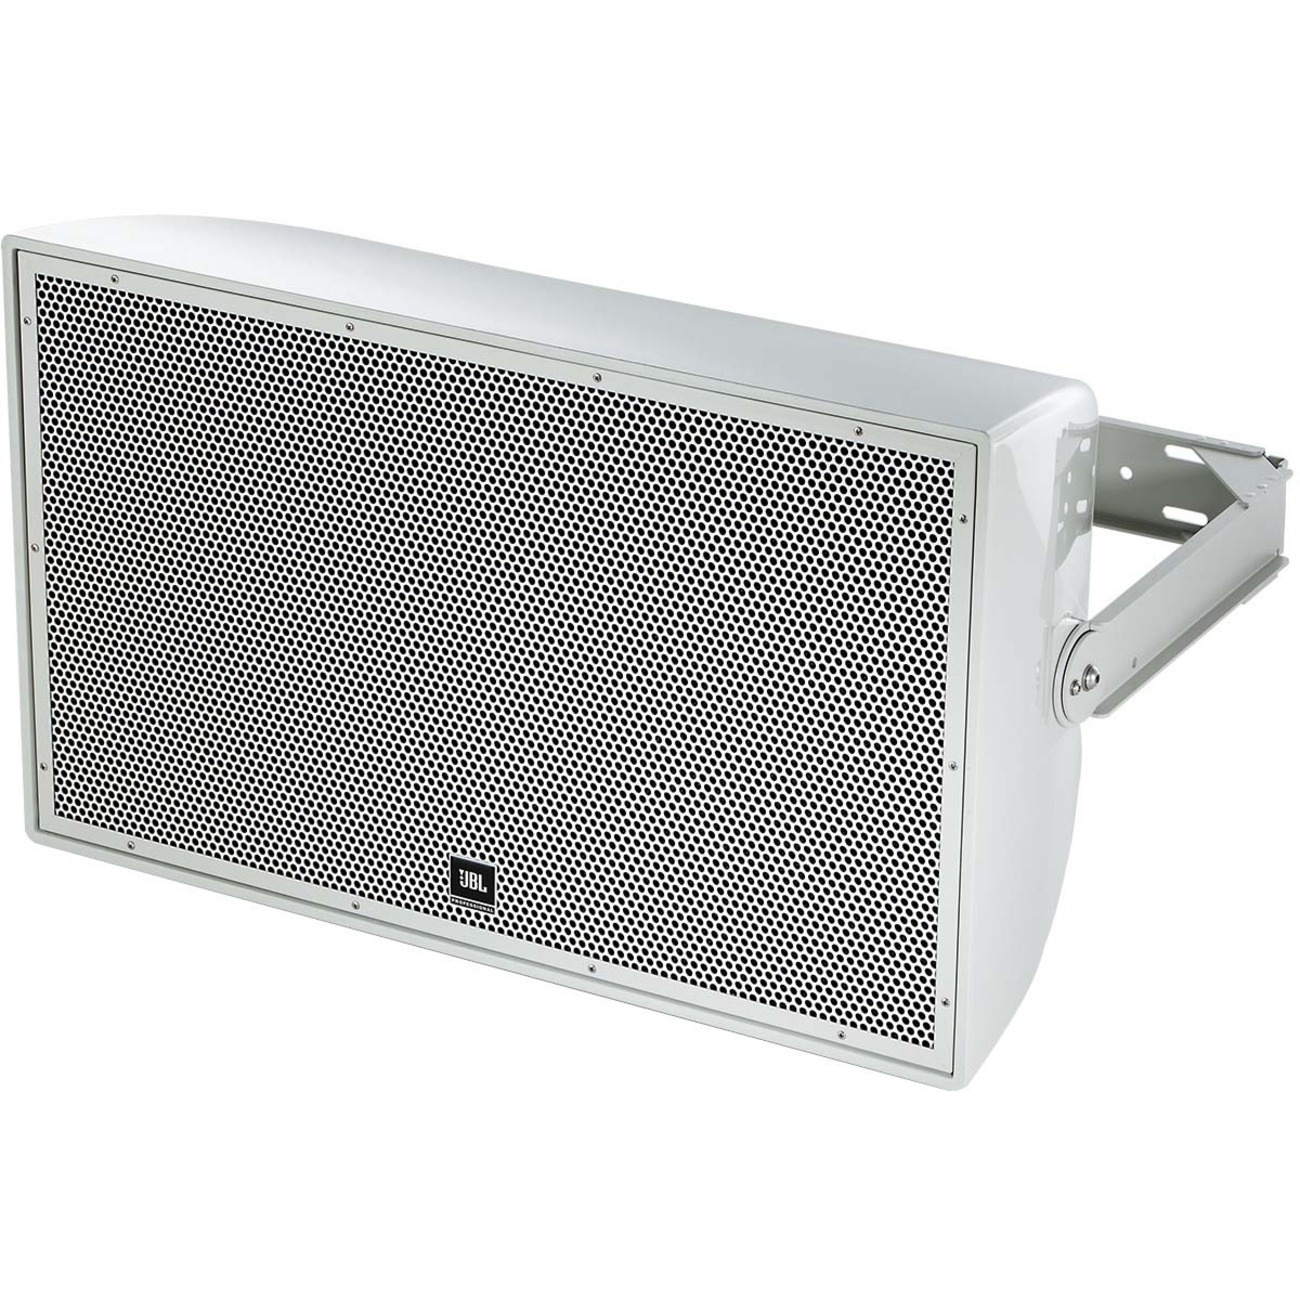 JBL Professional AW566-LS 2-way Outdoor Speaker - 400 W RMS - Black